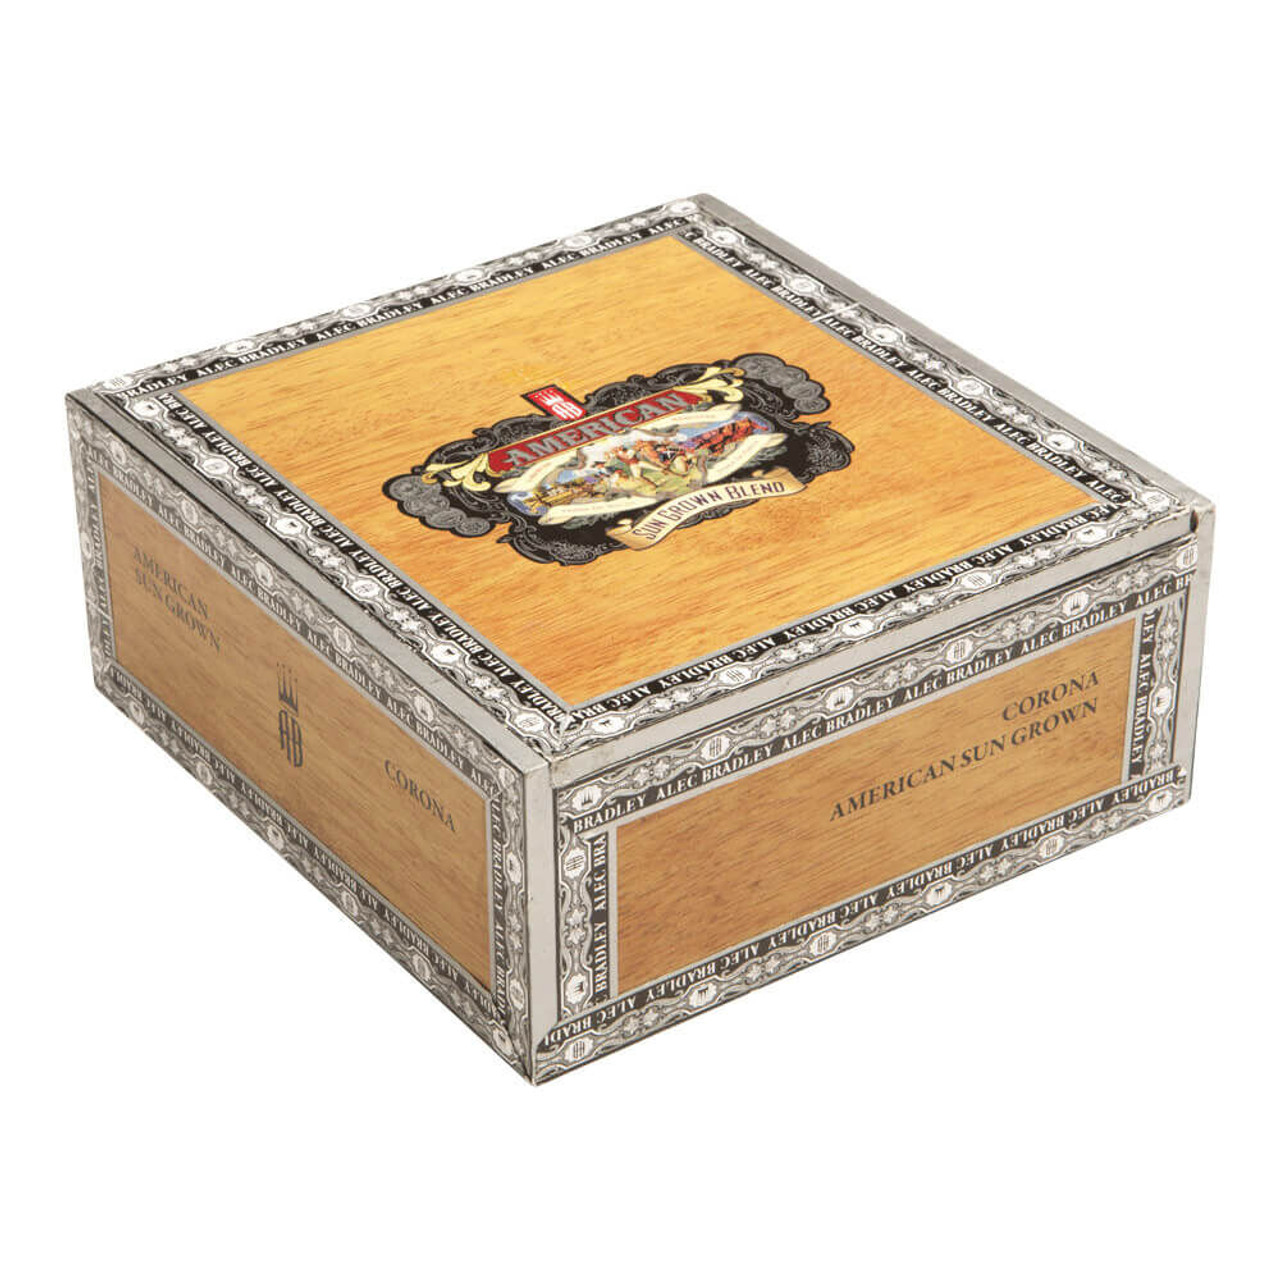 Alec Bradley American Sun Grown Corona Cigars - 5.5 x 42 (Box of 24) *Box